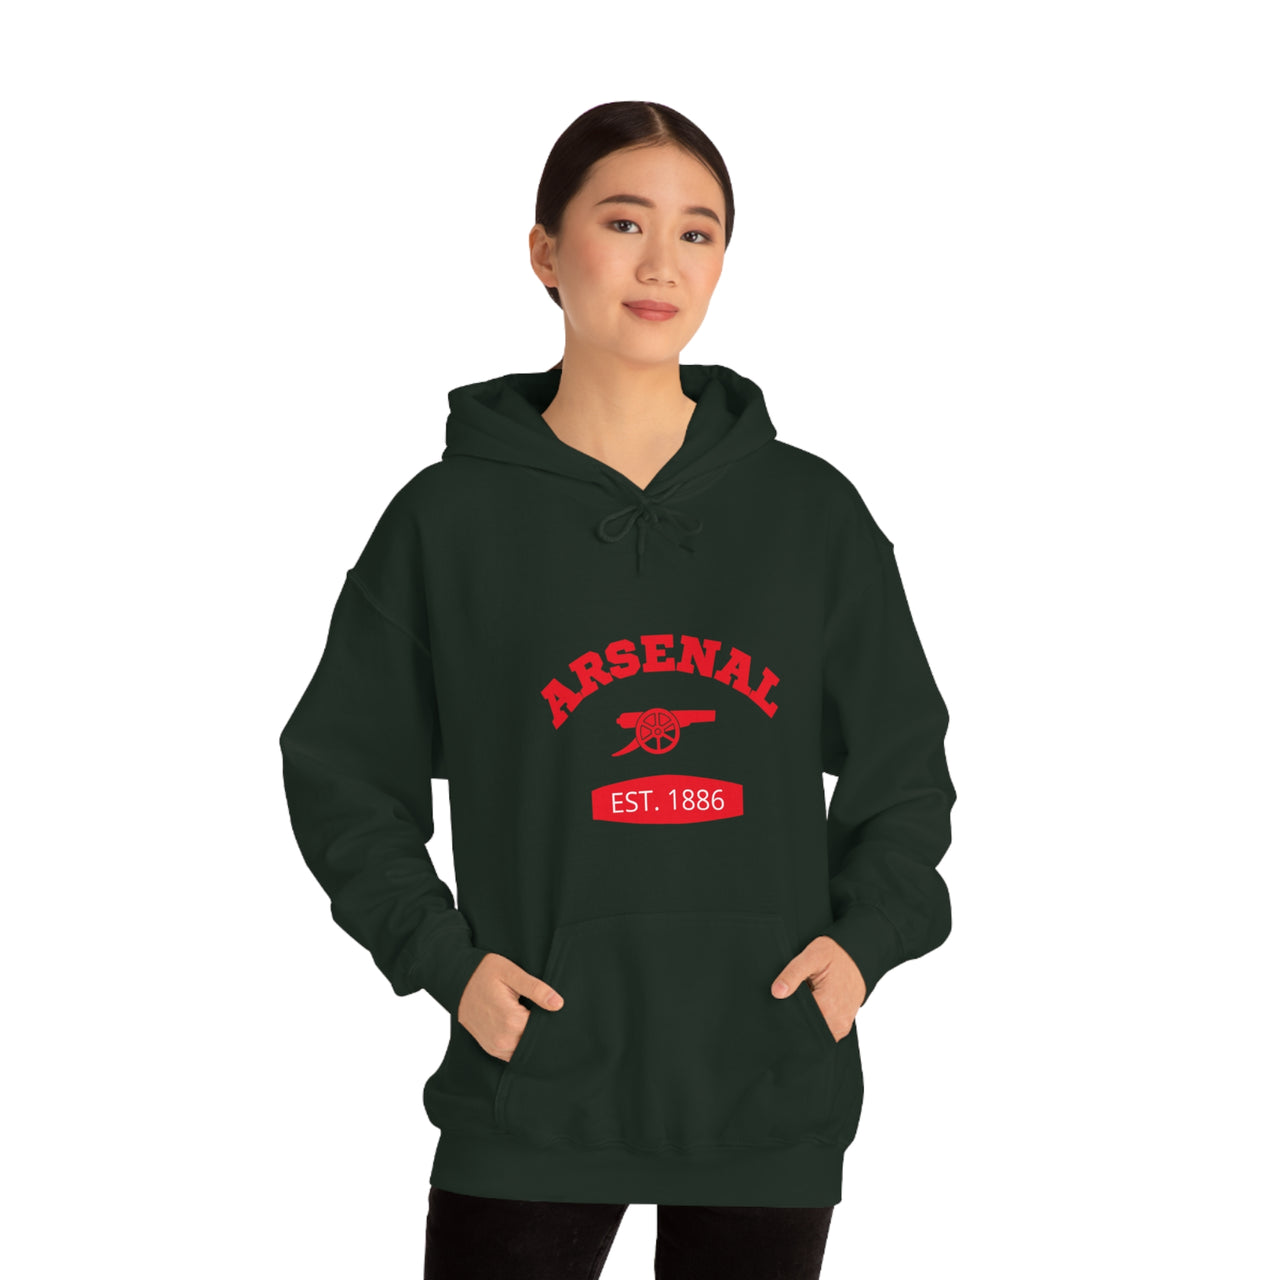 Arsenal Unisex Hooded Sweatshirt